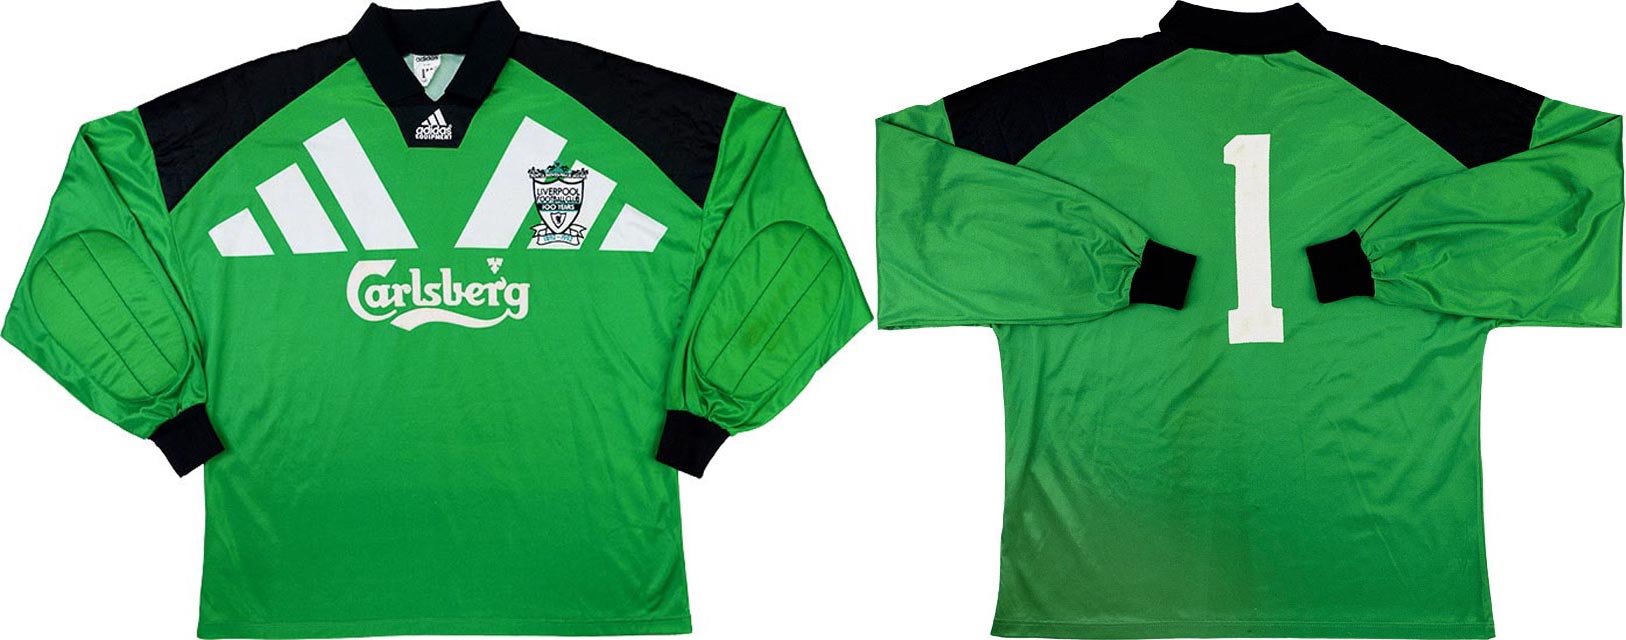 liverpool away kit 1992